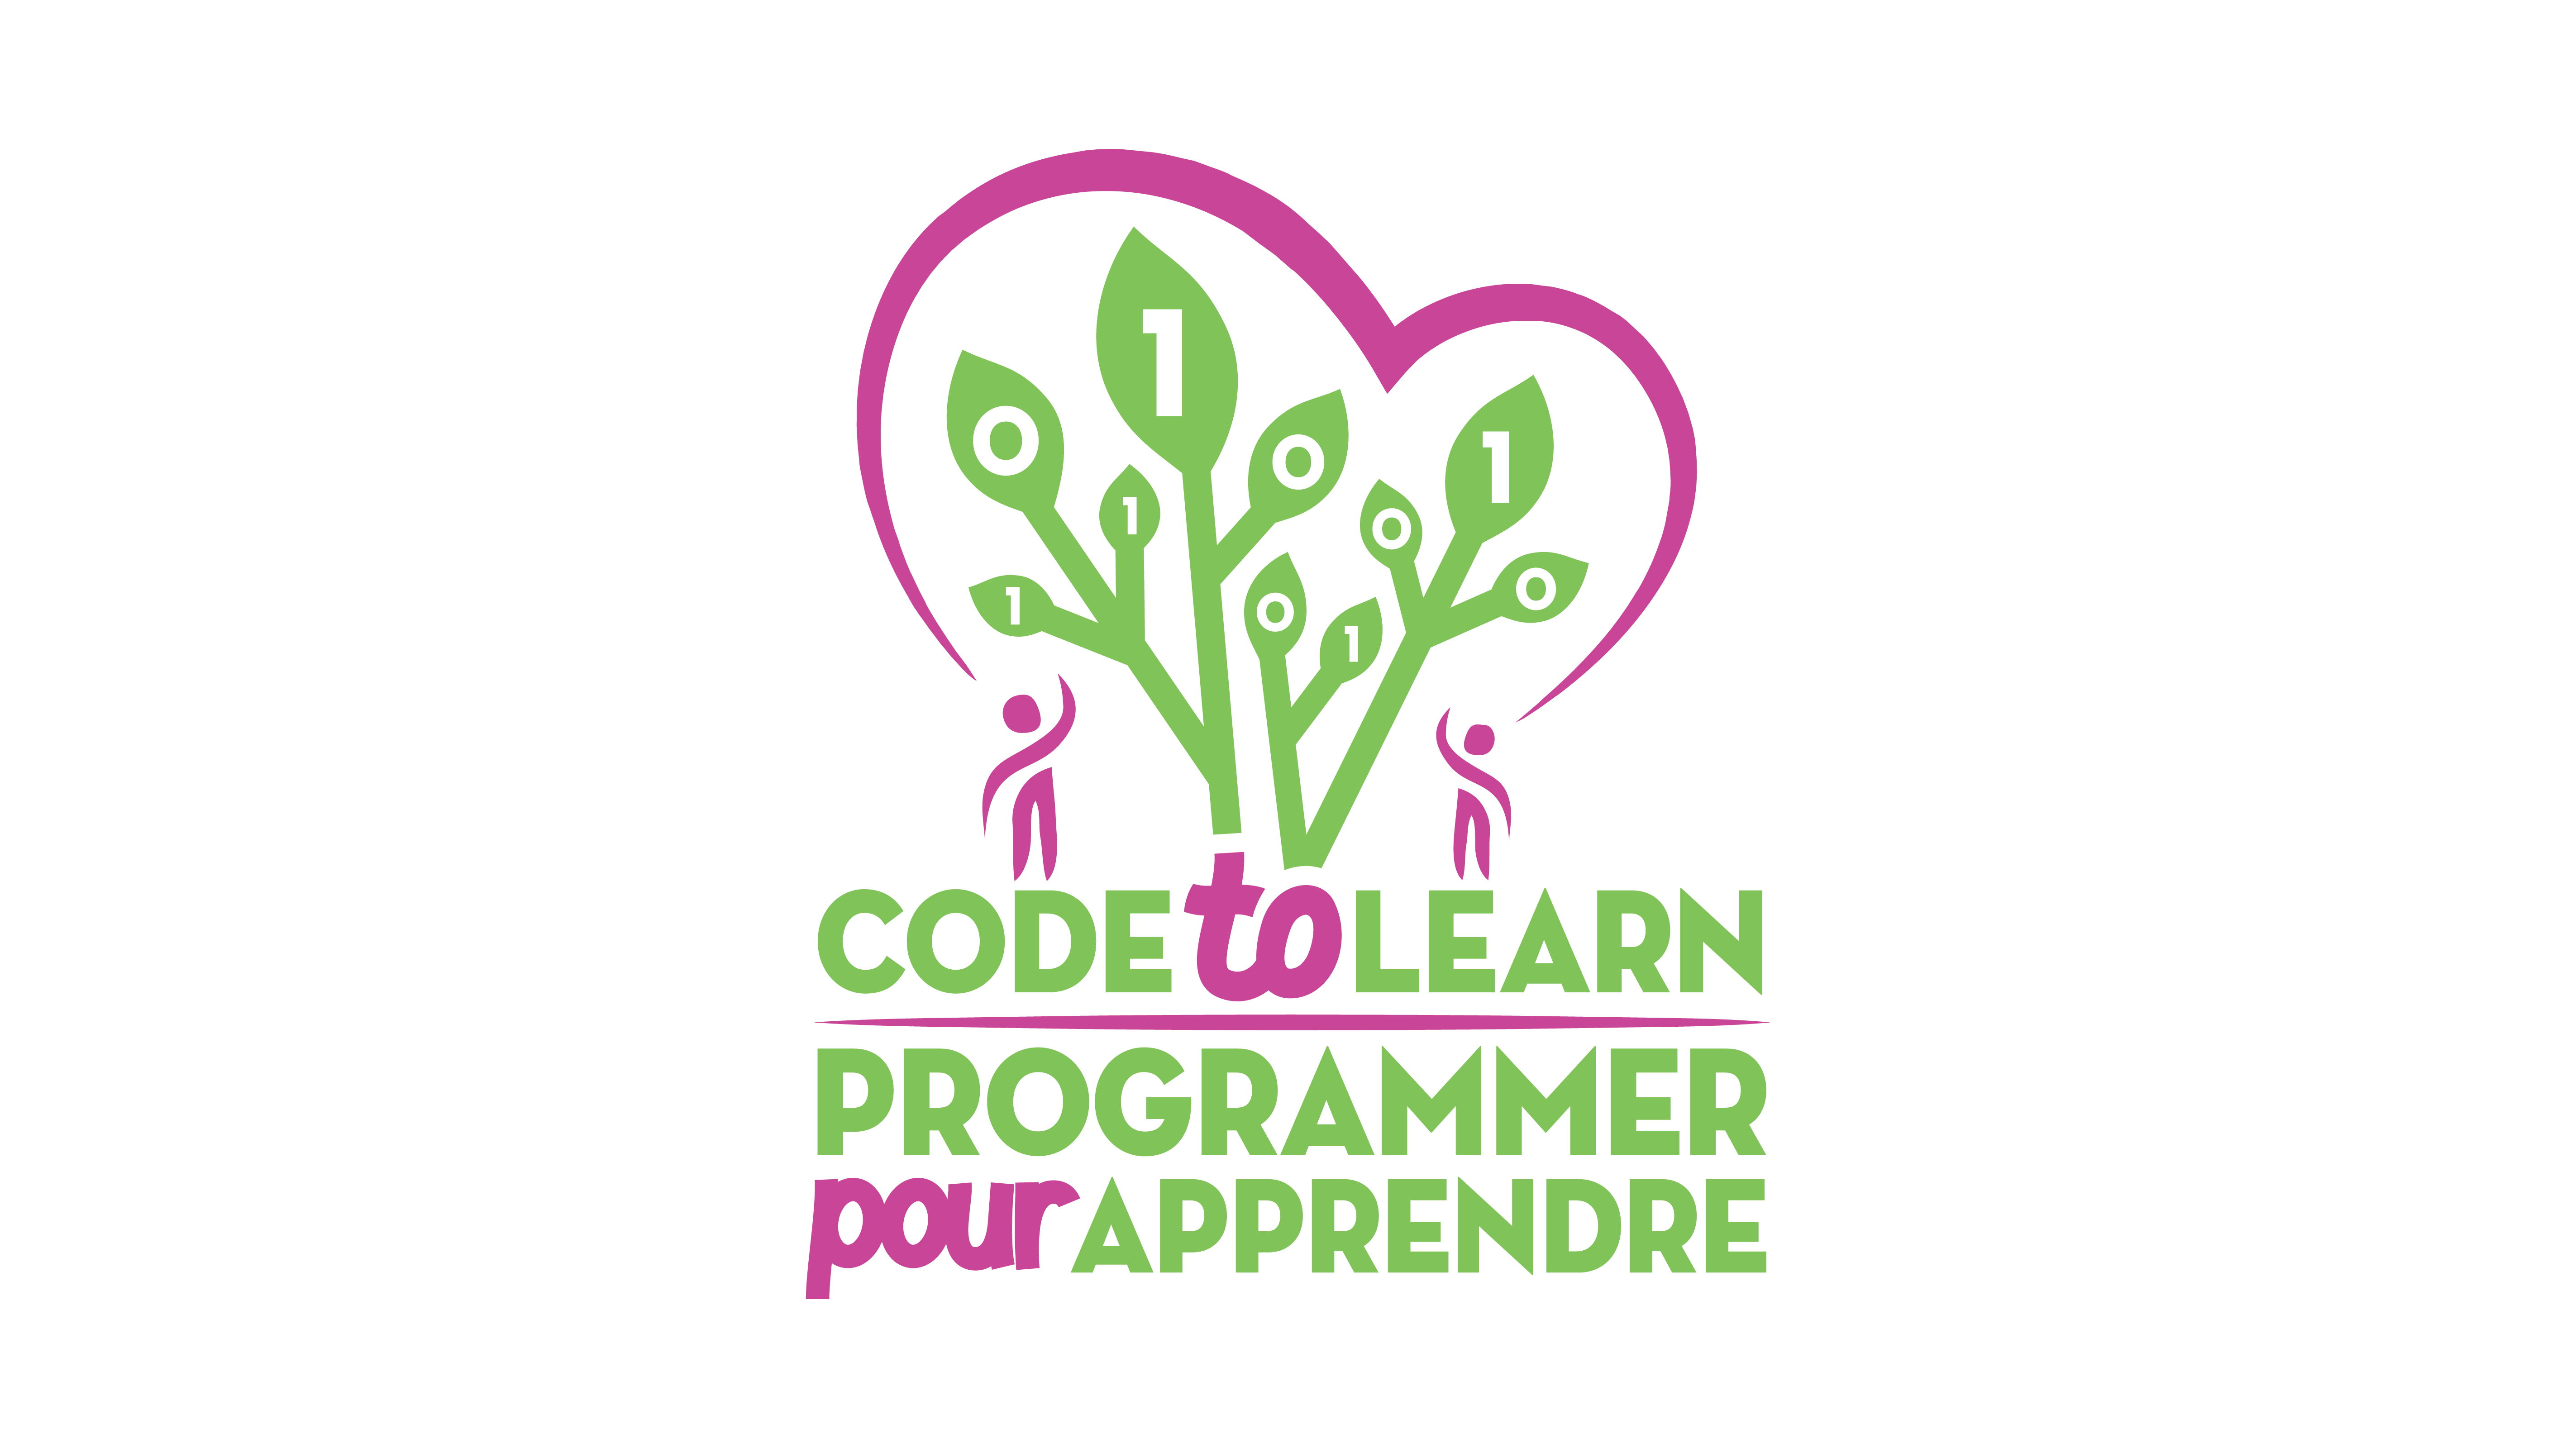 Programmer pour apprendre